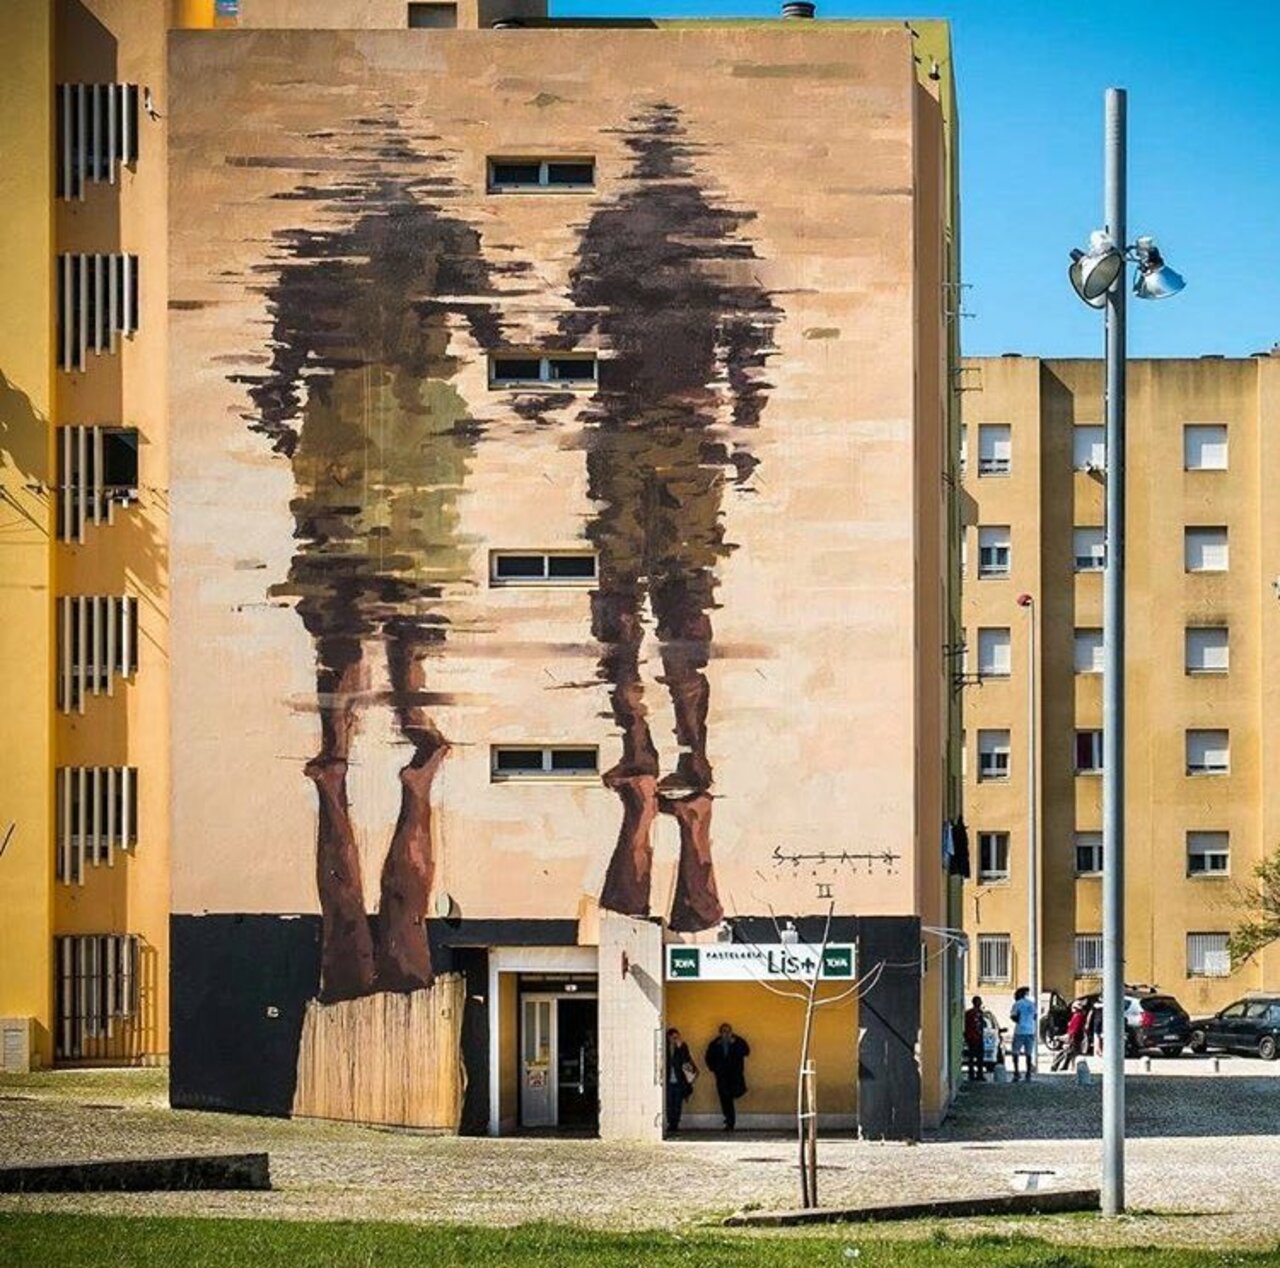 Street Art by Borondo found in Lisbon   #art #mural #graffiti #streetart https://t.co/AwnHgCO3sH